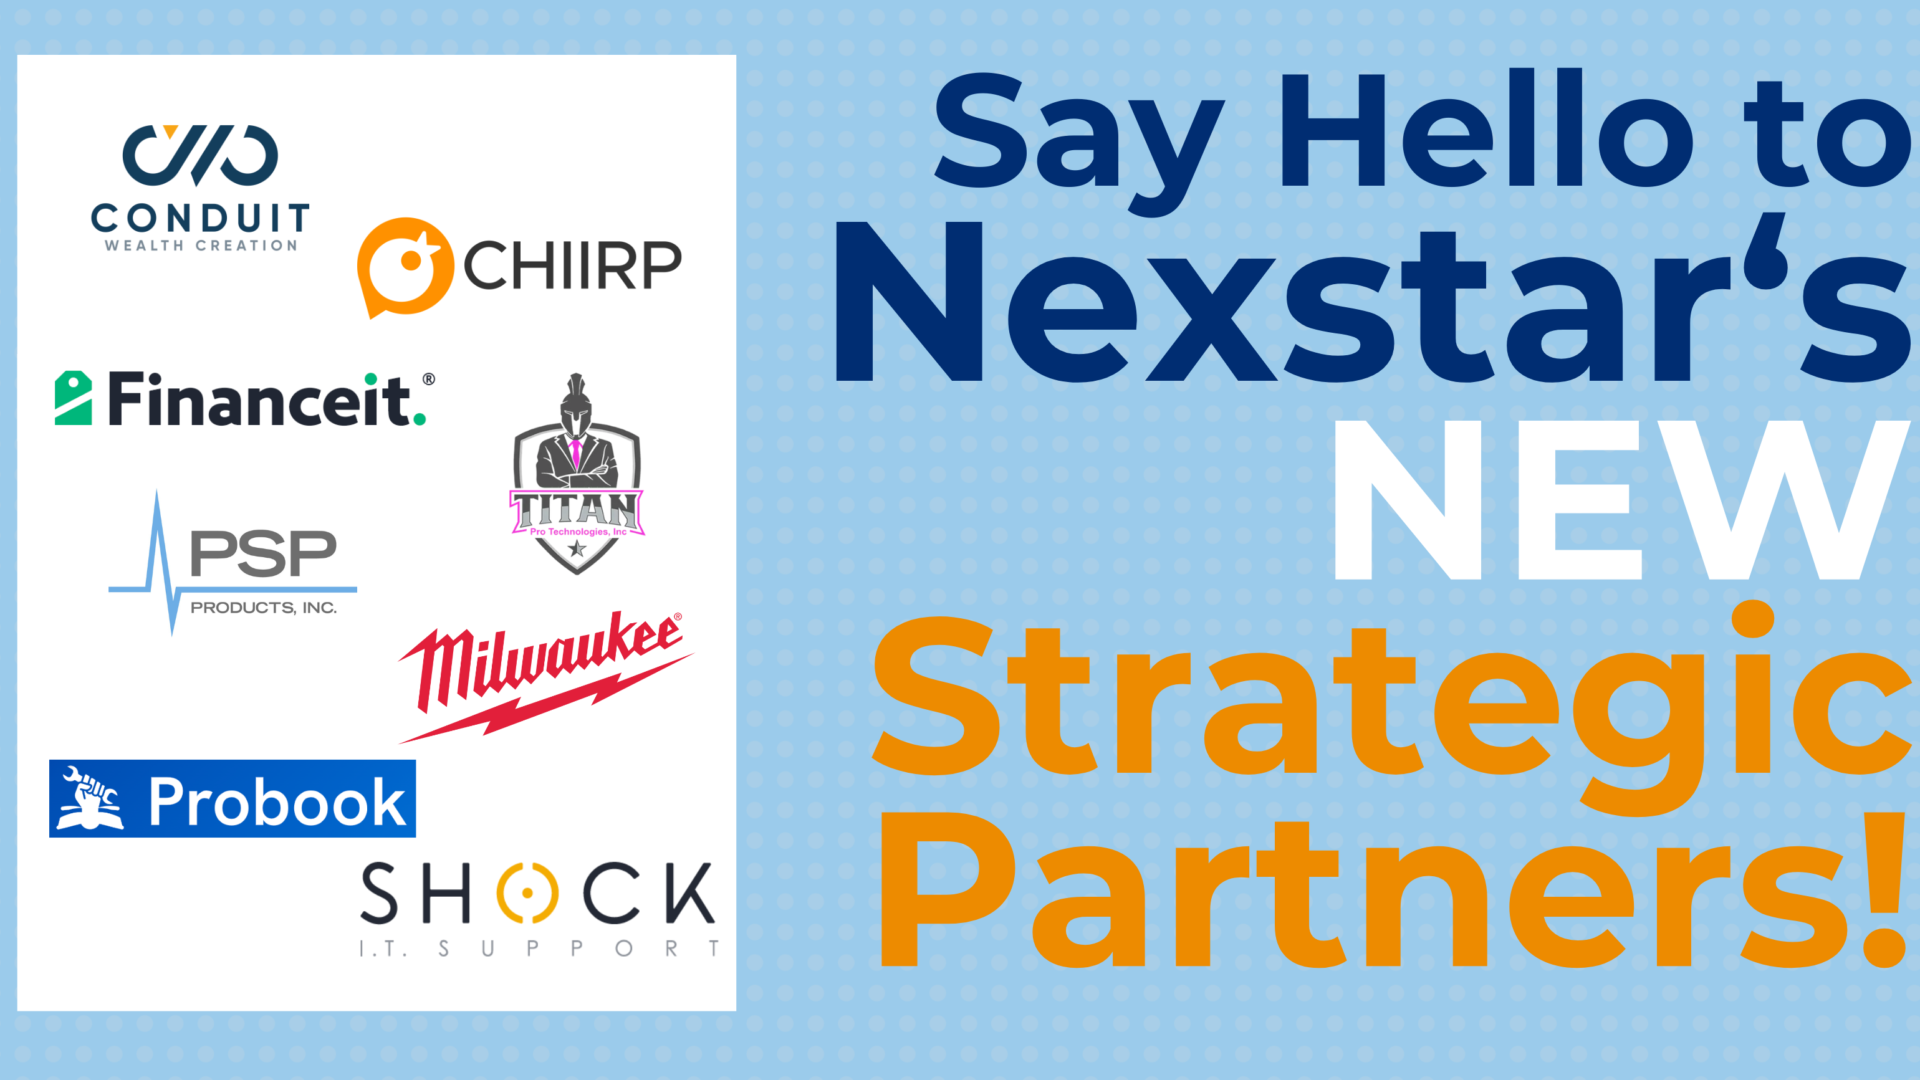 New Strategic Partners Join Nexstar